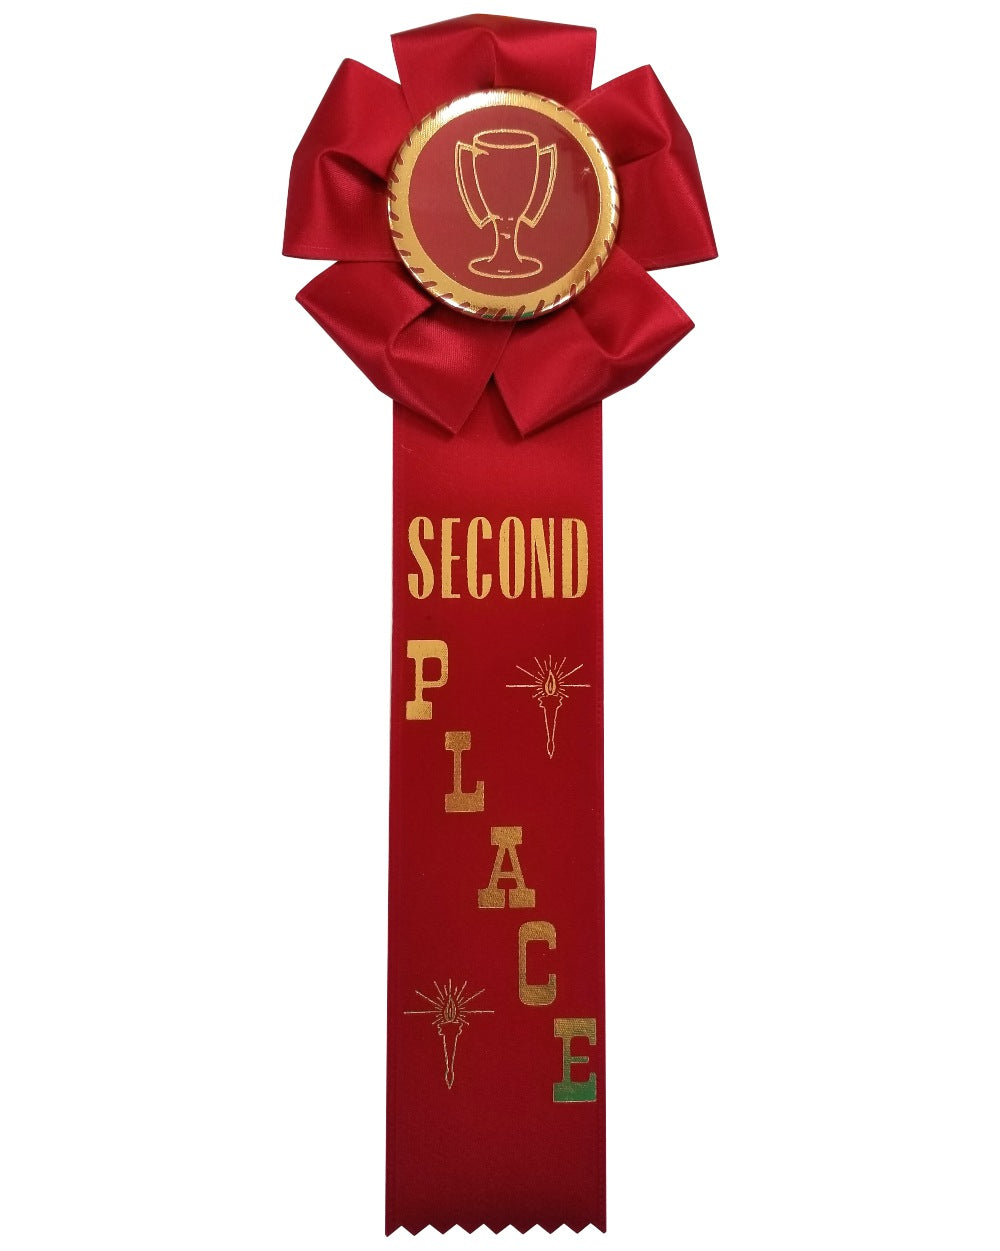 12th place ribbon